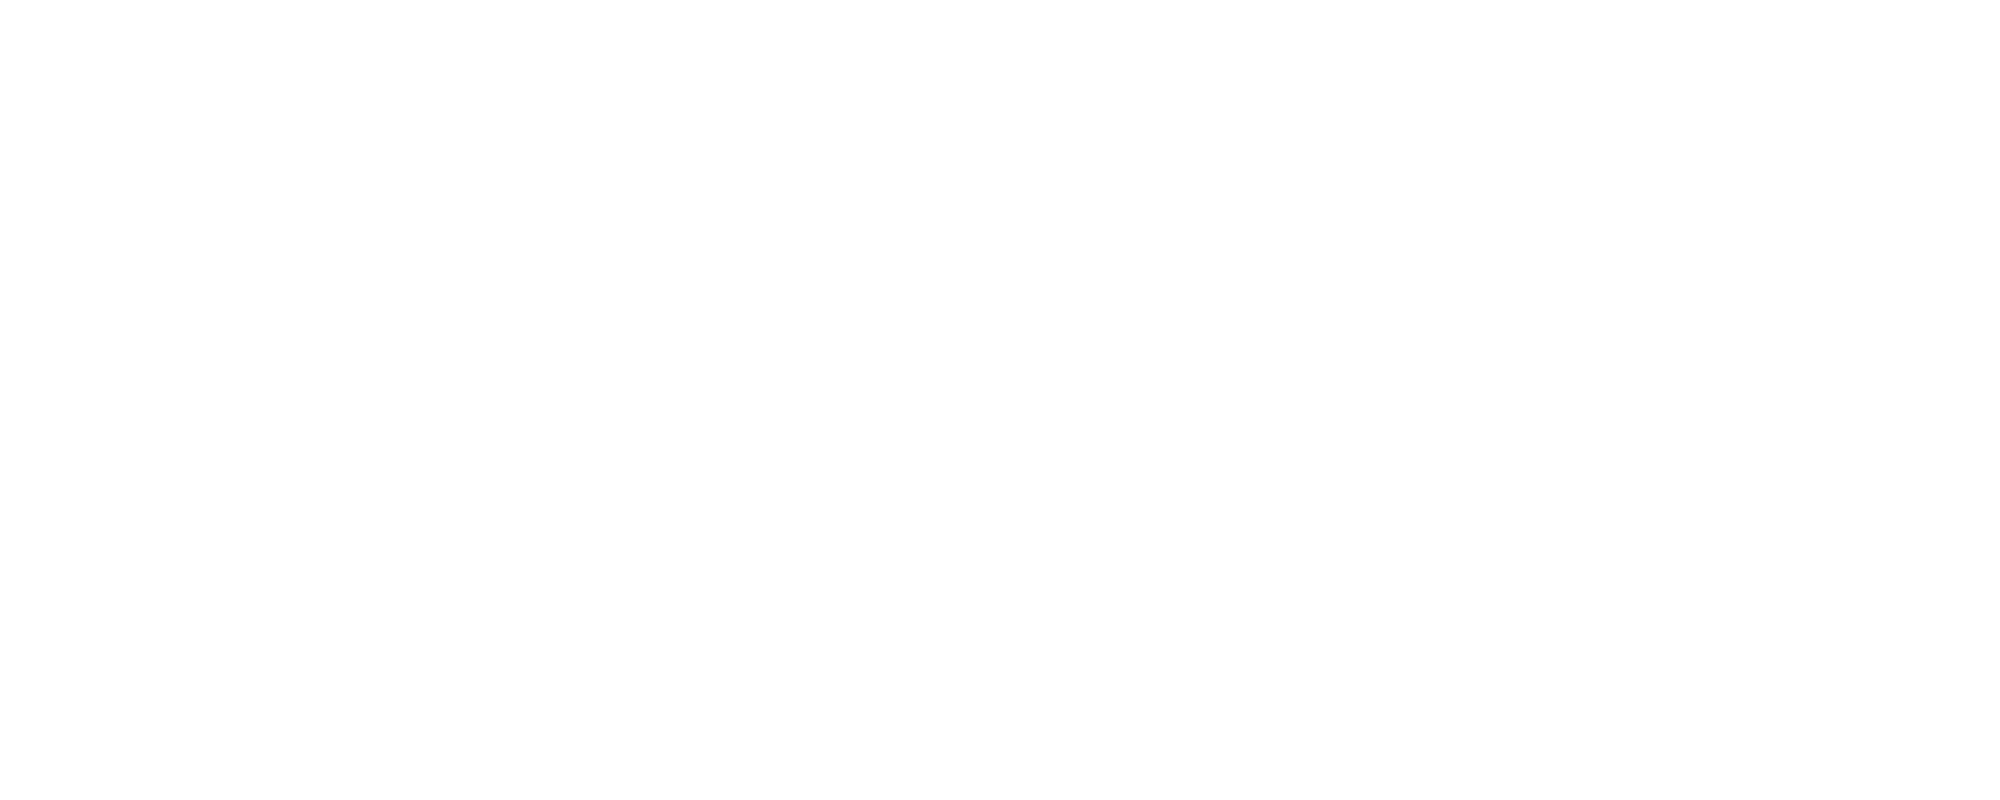 El Cerrito Historical Society (1).png